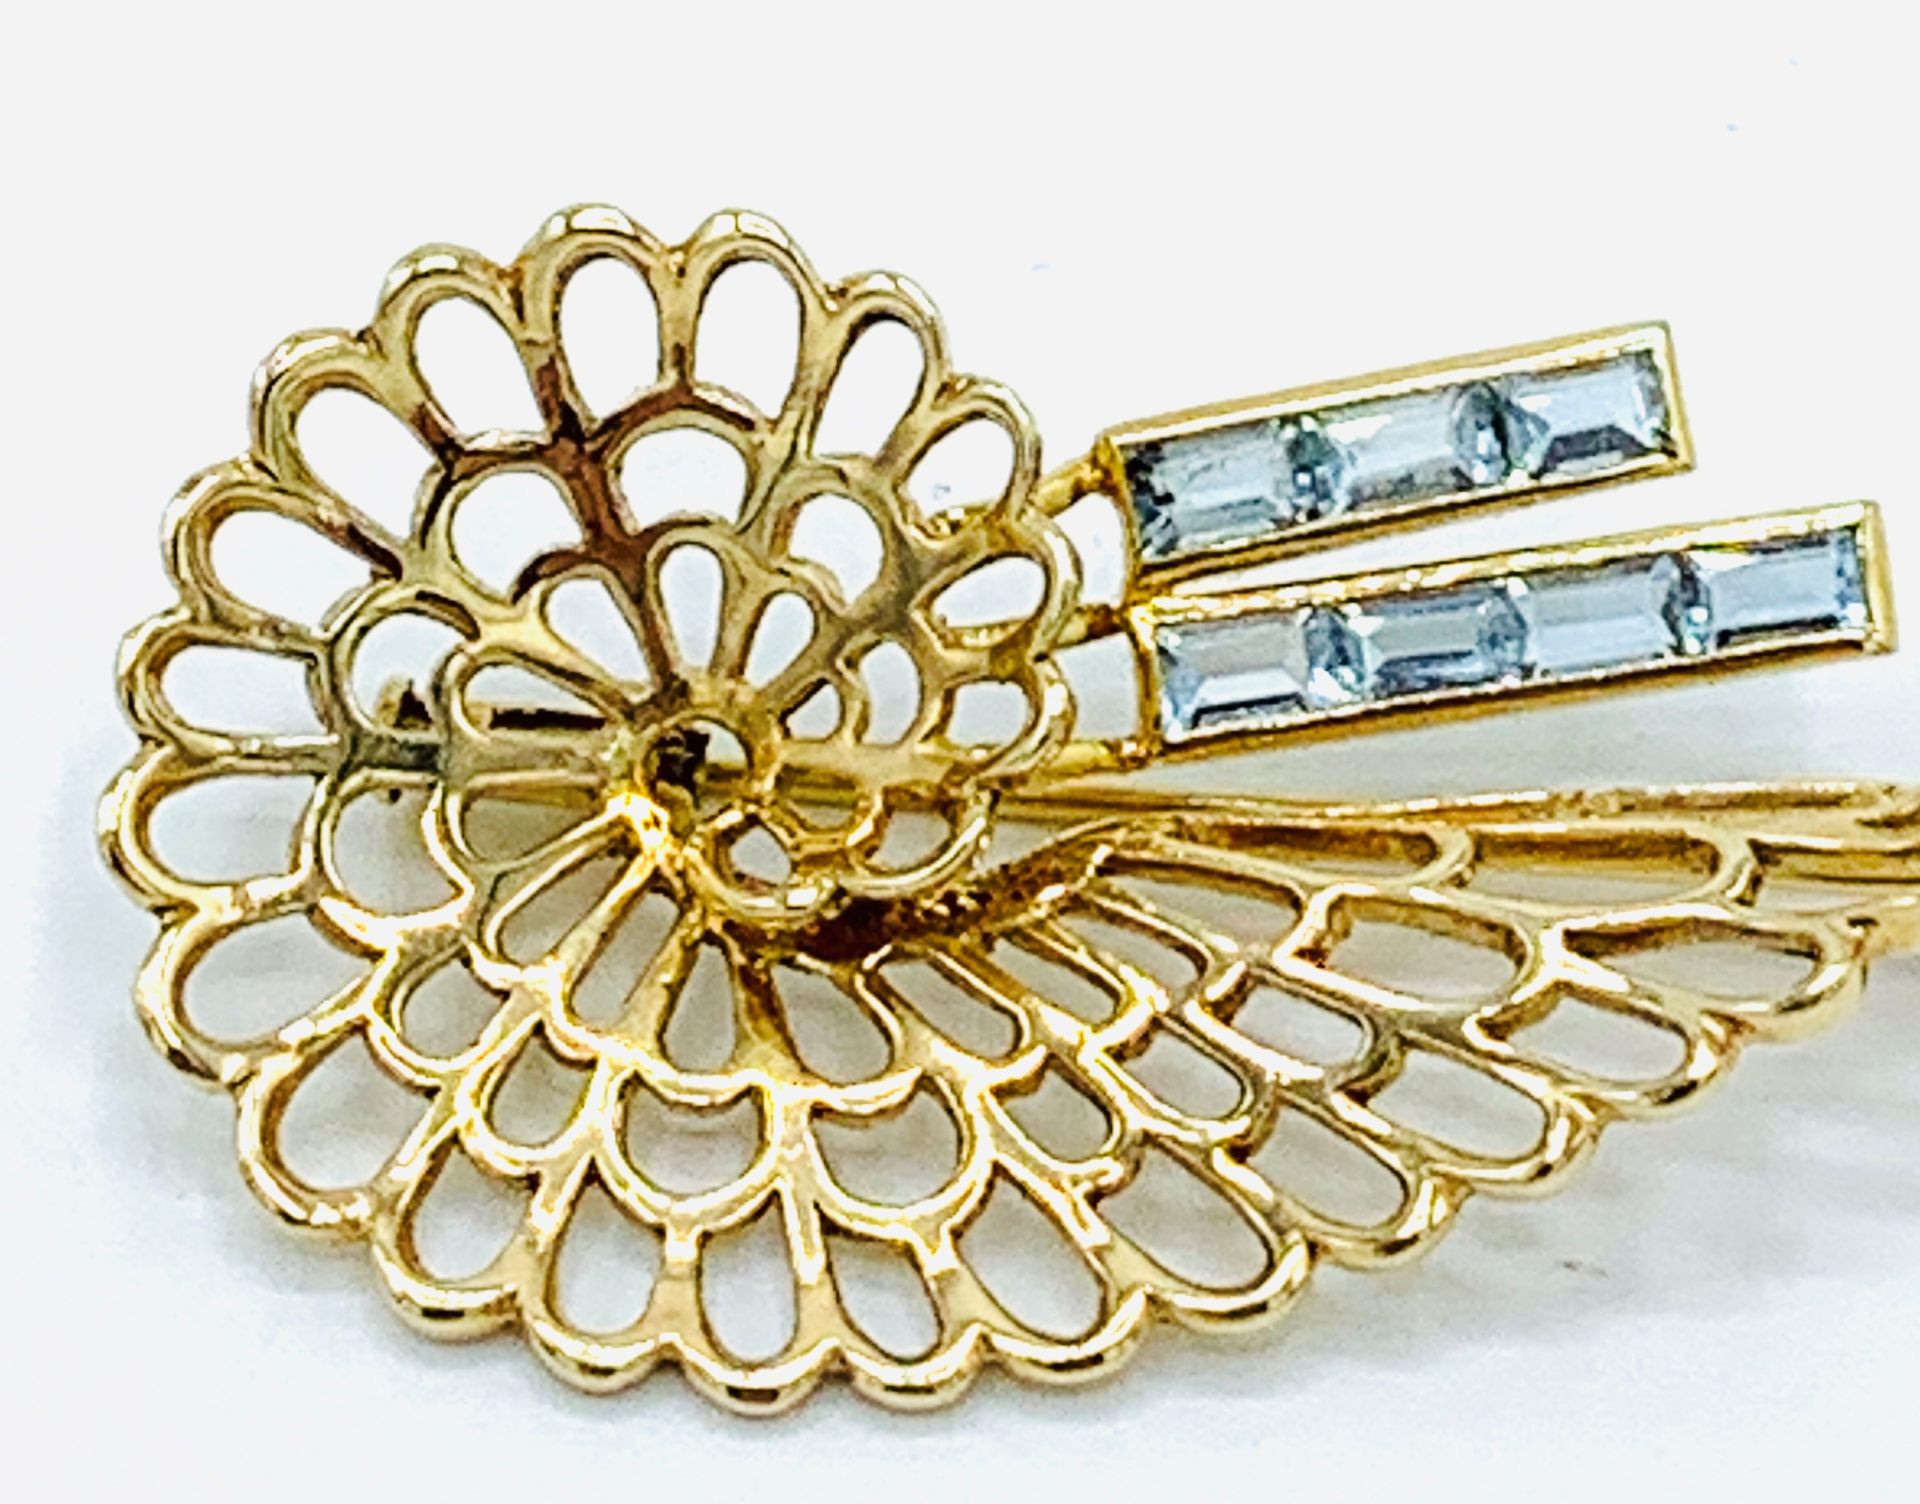 585 gold filigree brooch set with 7 aquamarines.